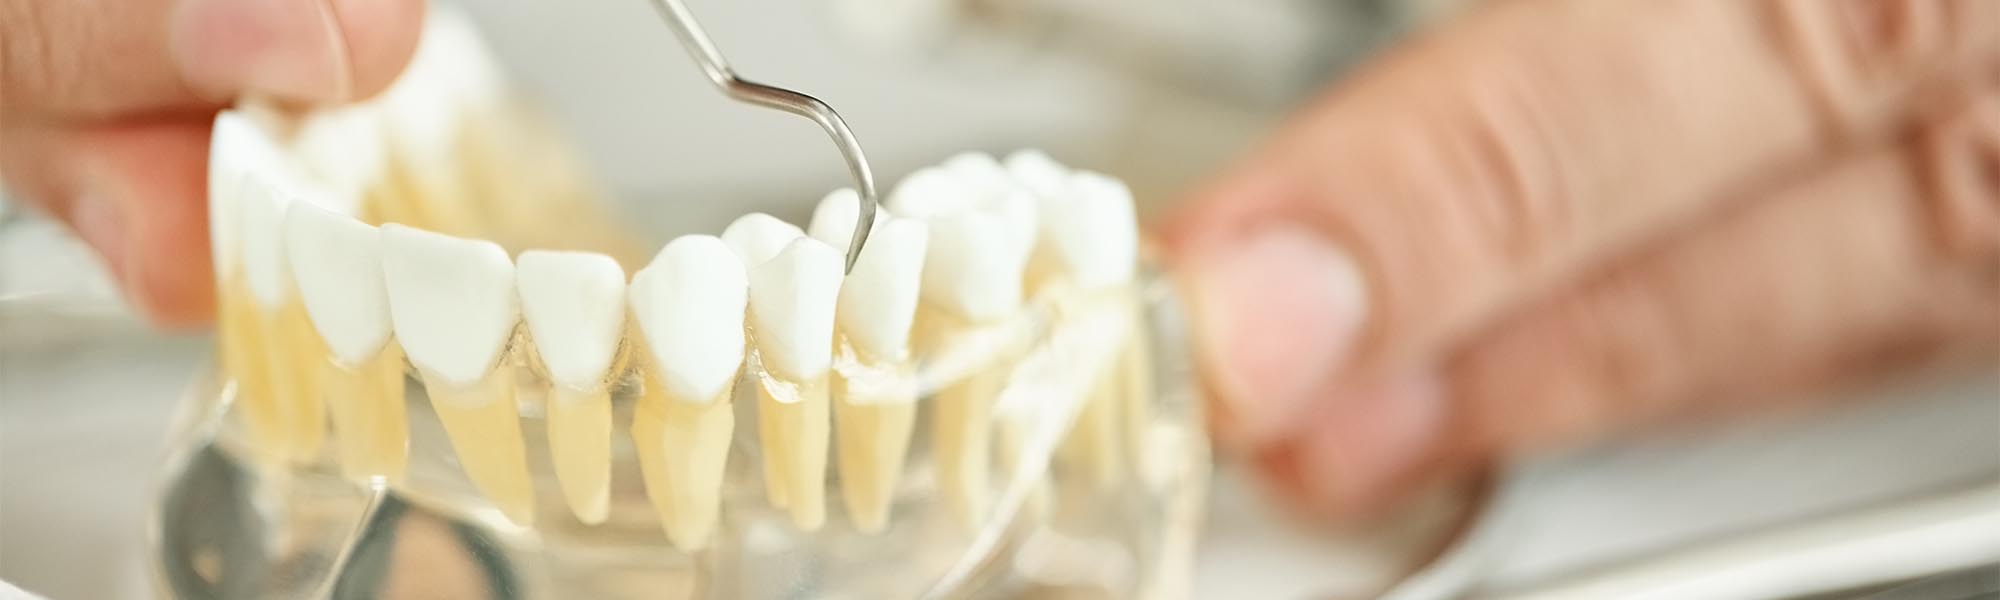 Restorative Dental Treatments Dentist Torrance CA